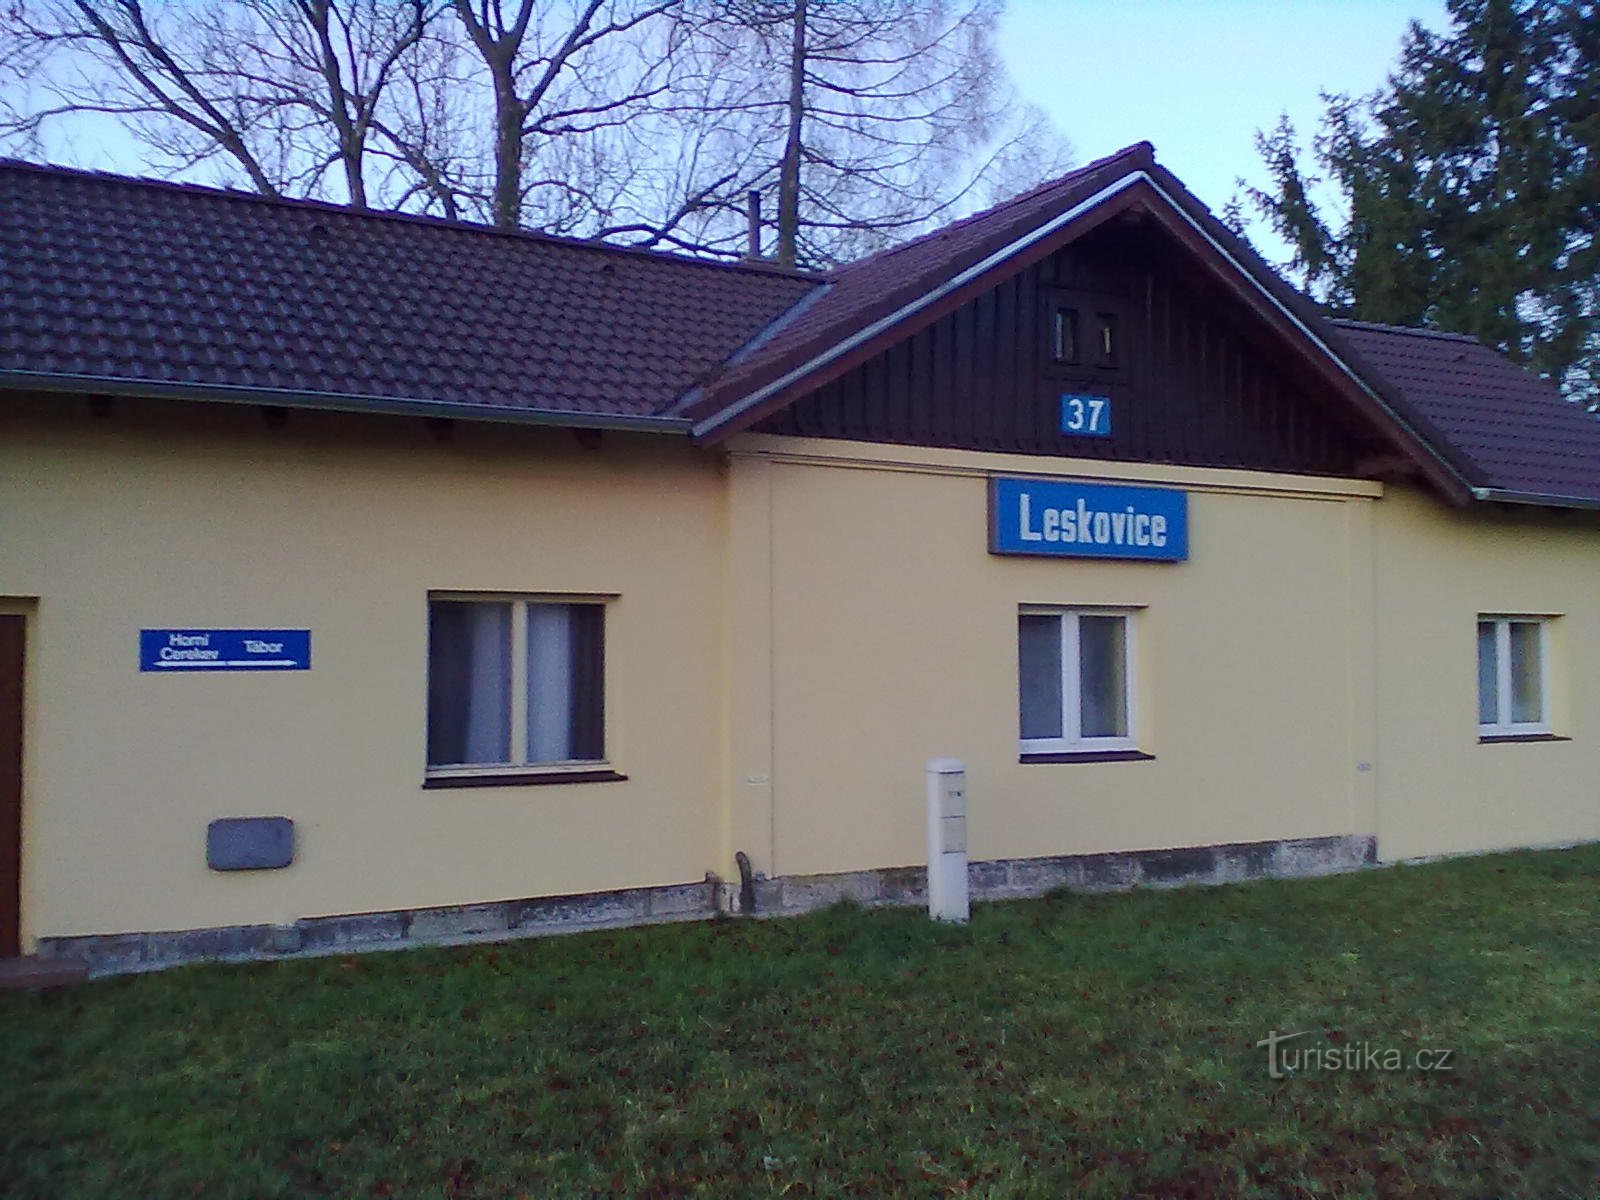 2nd railway stop in Leskovice.